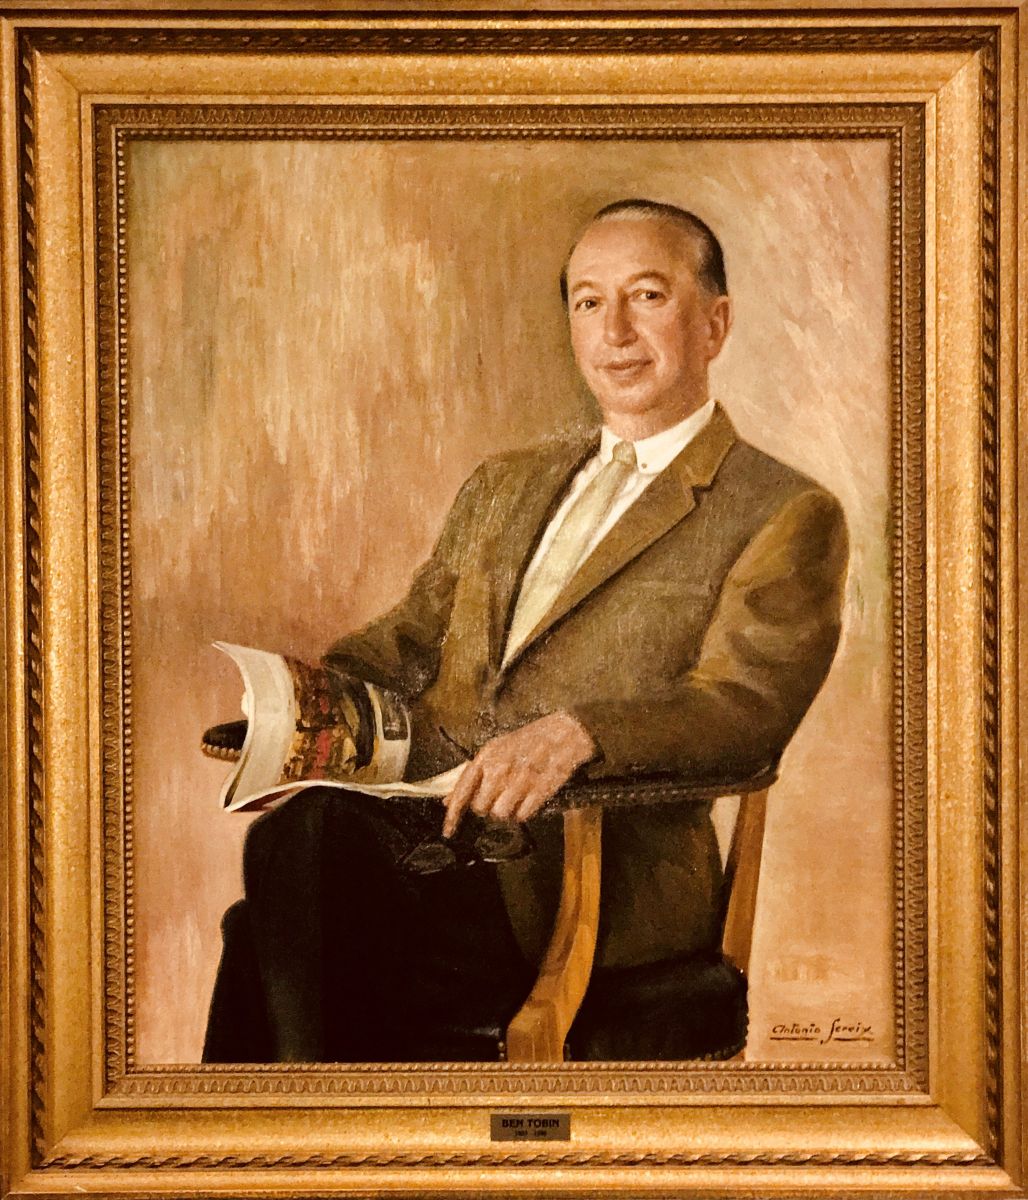 image of Ben Tobin's portrait completed.